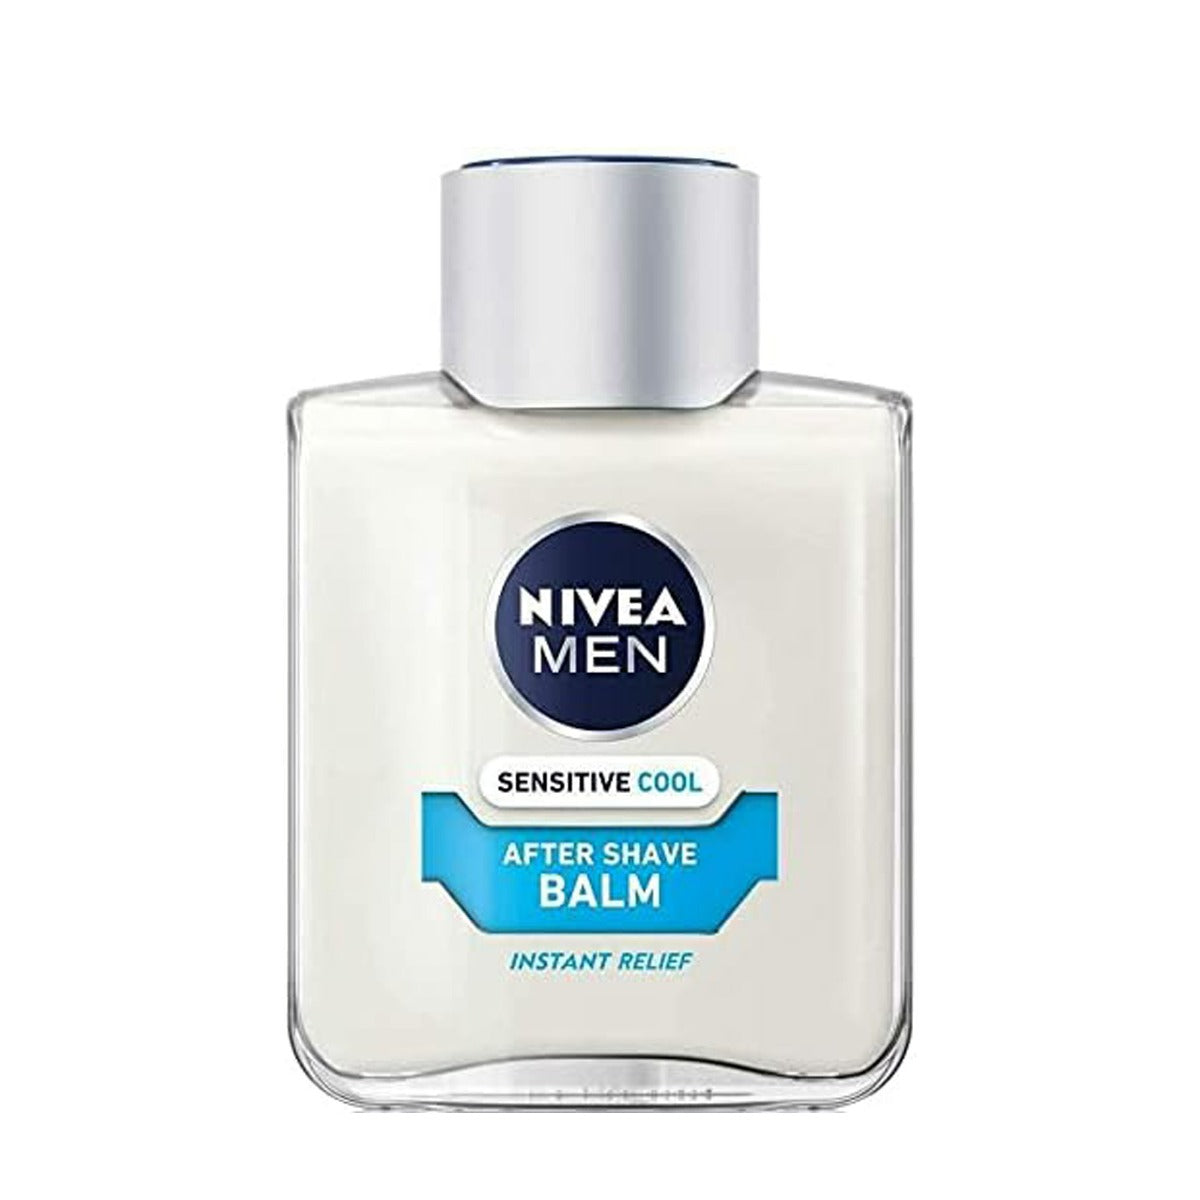 Nivea Men Sensitive Cooling Post Shave Balm (100ml)